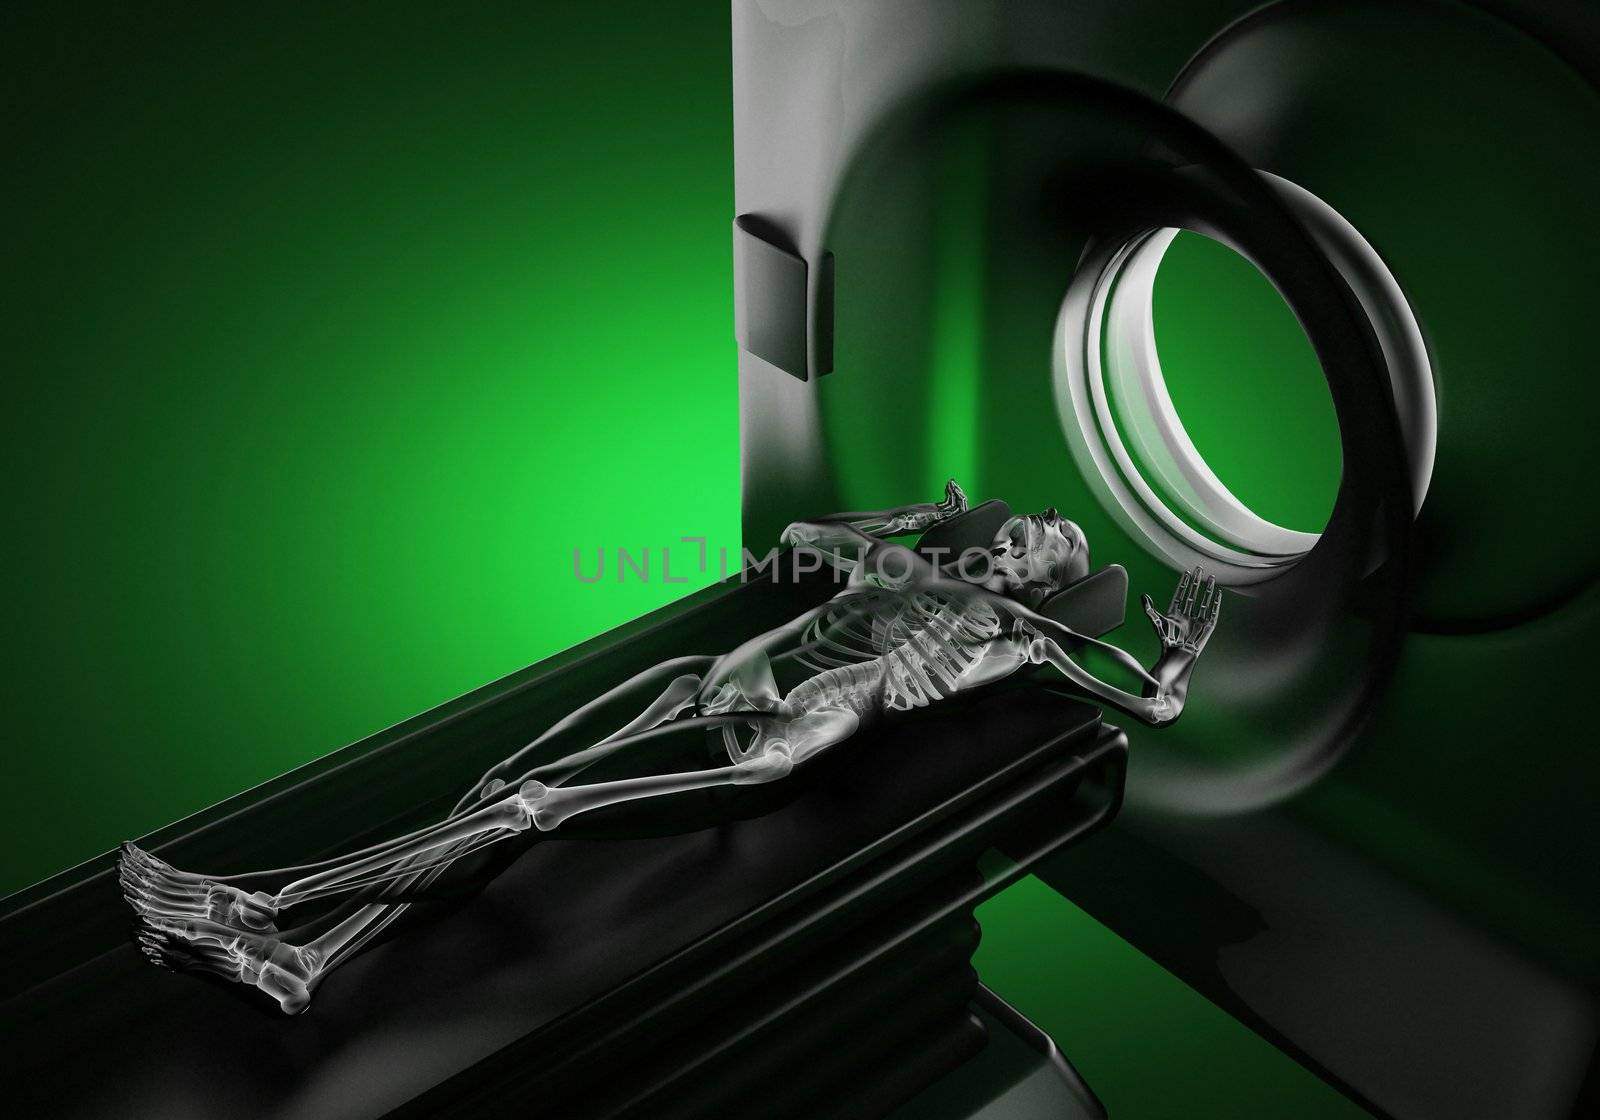 MRI examination by videodoctor